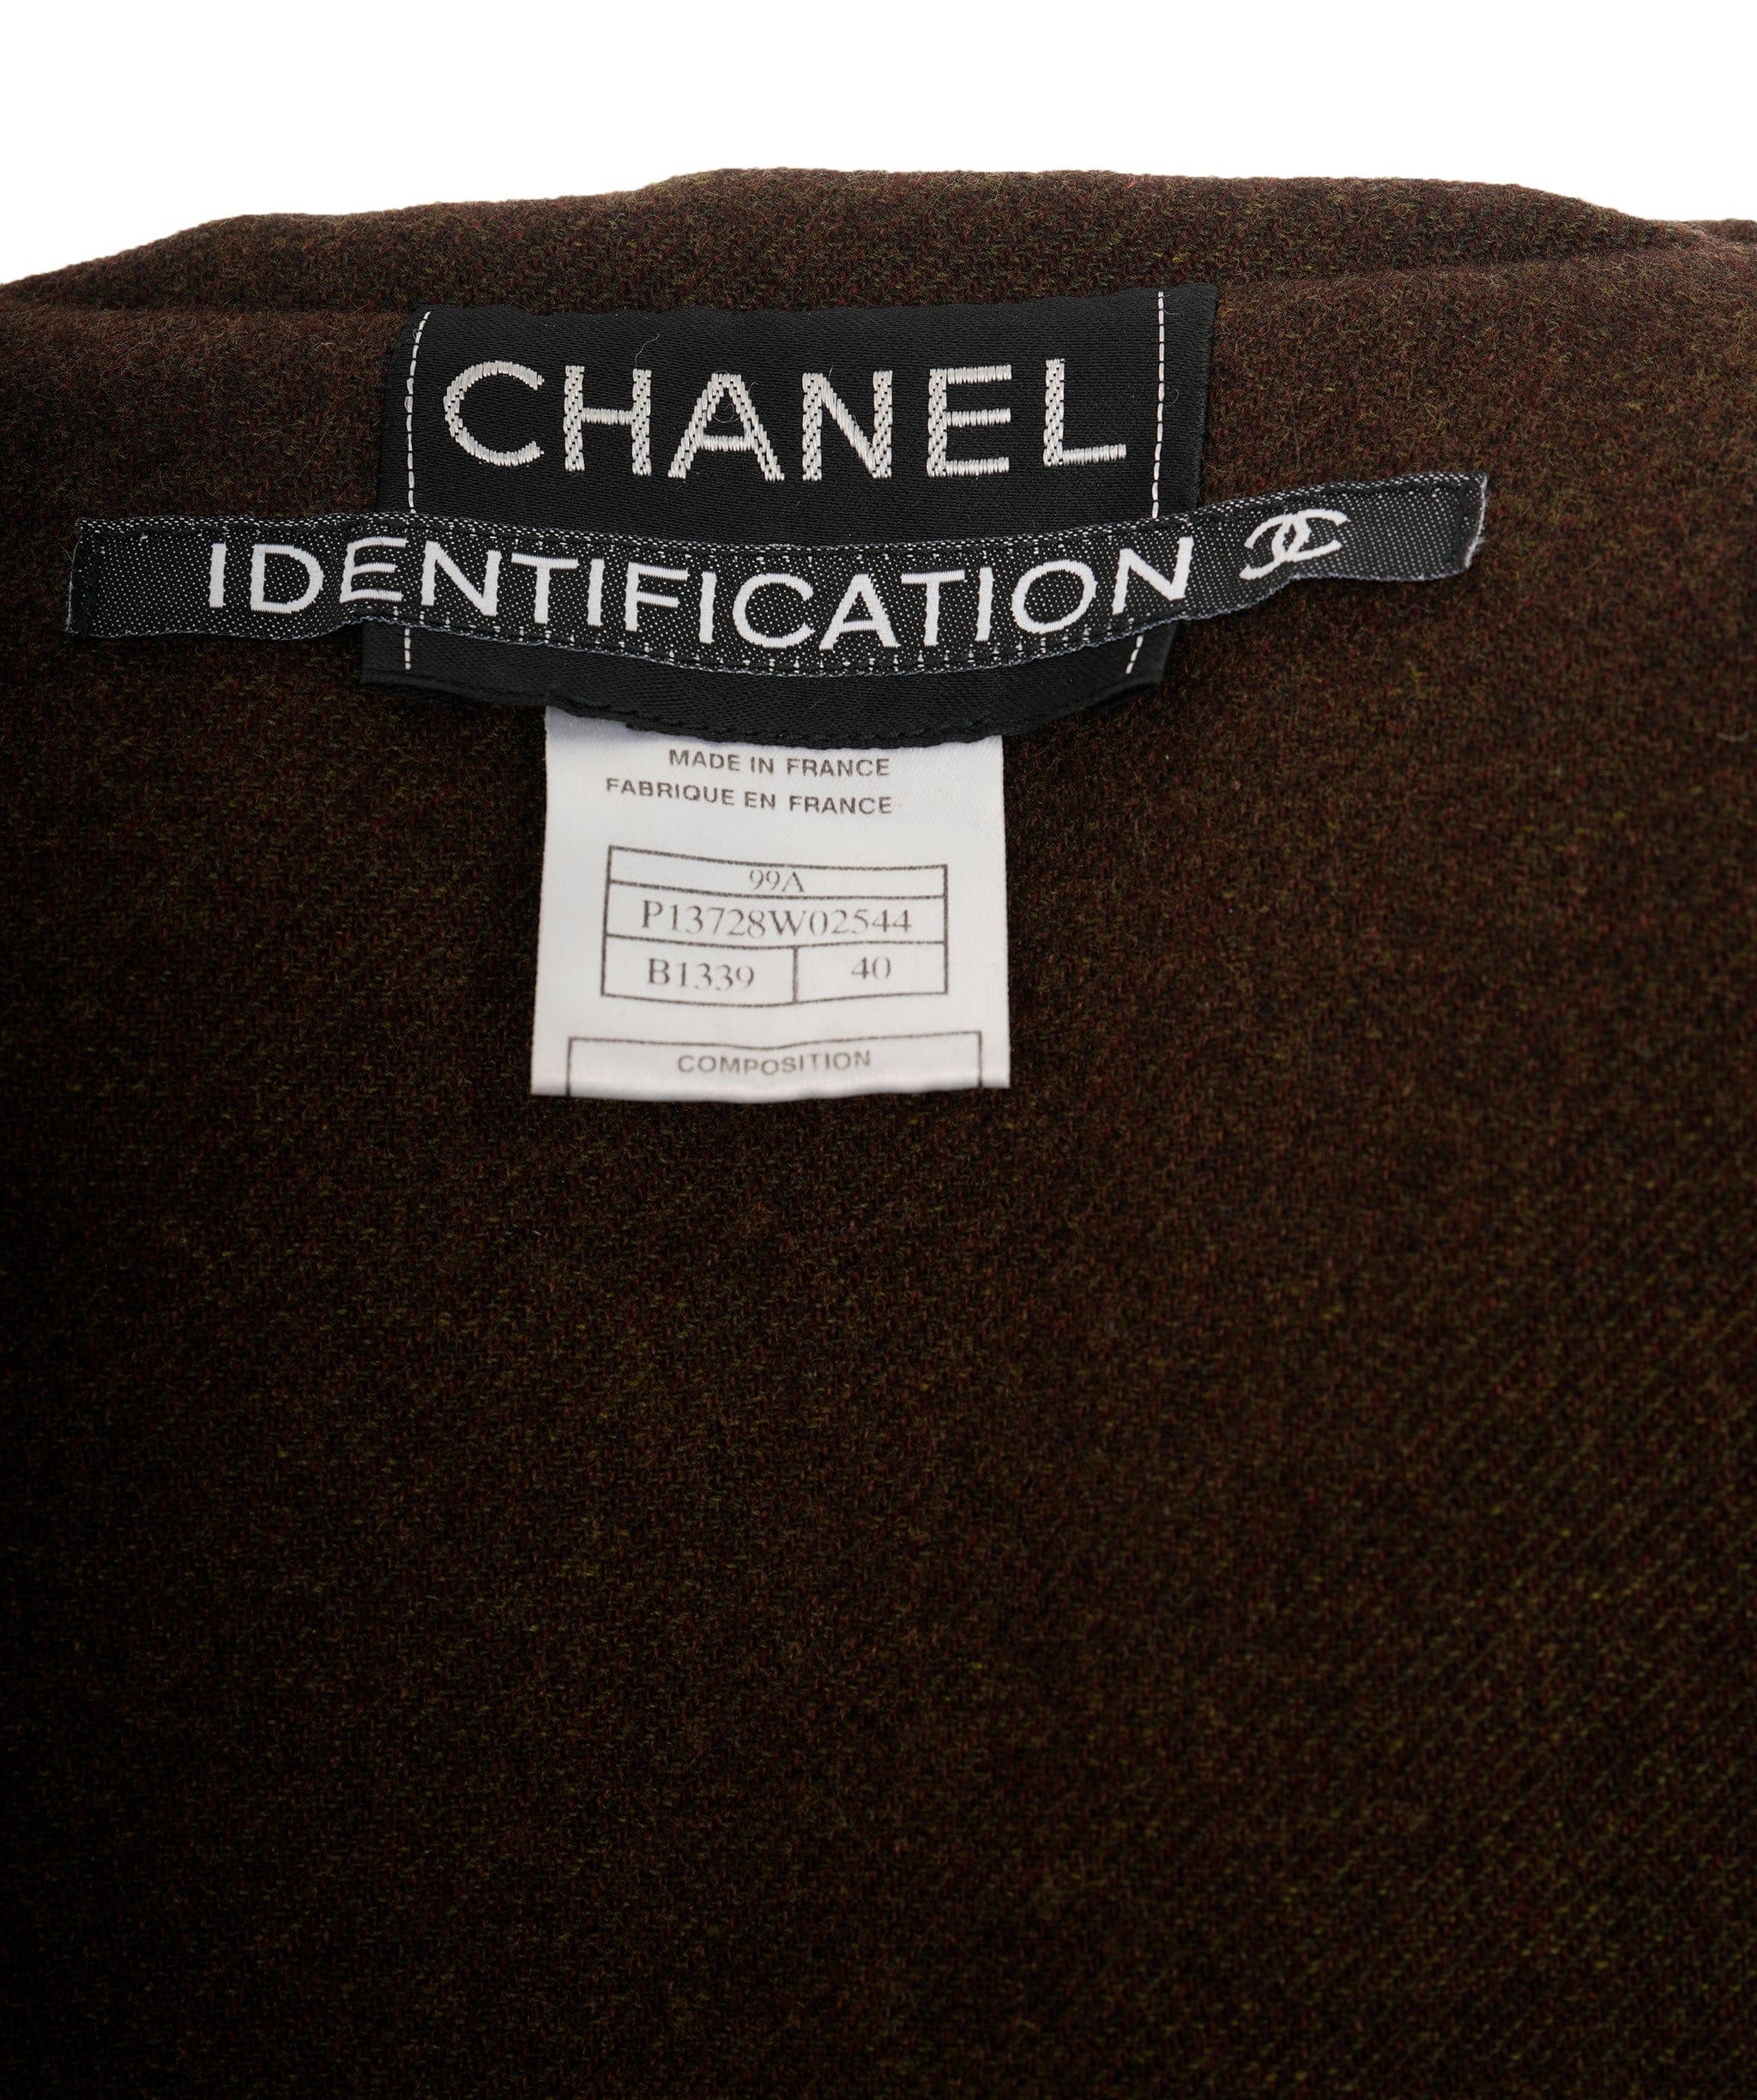 Chanel CHANEL IDENTIFICATION VINTAGE LEATHER AND CASHMERE JACKET COAT UKL1337